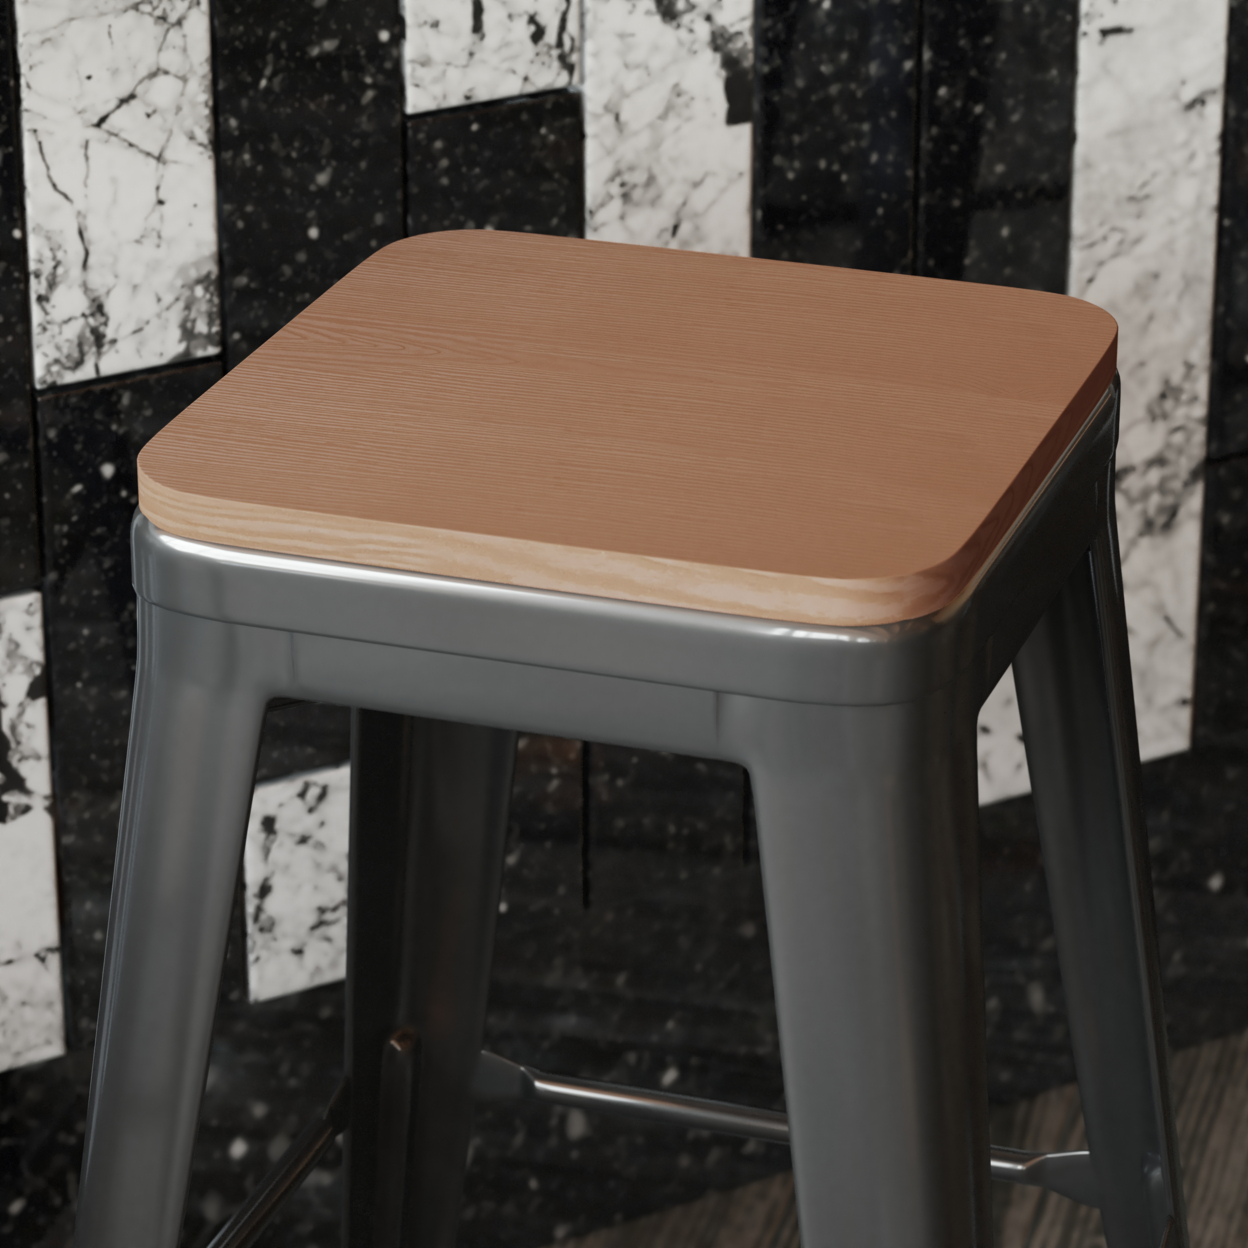 4 Piece Polyresin Chair Seats, Textured Design, Teak Brown